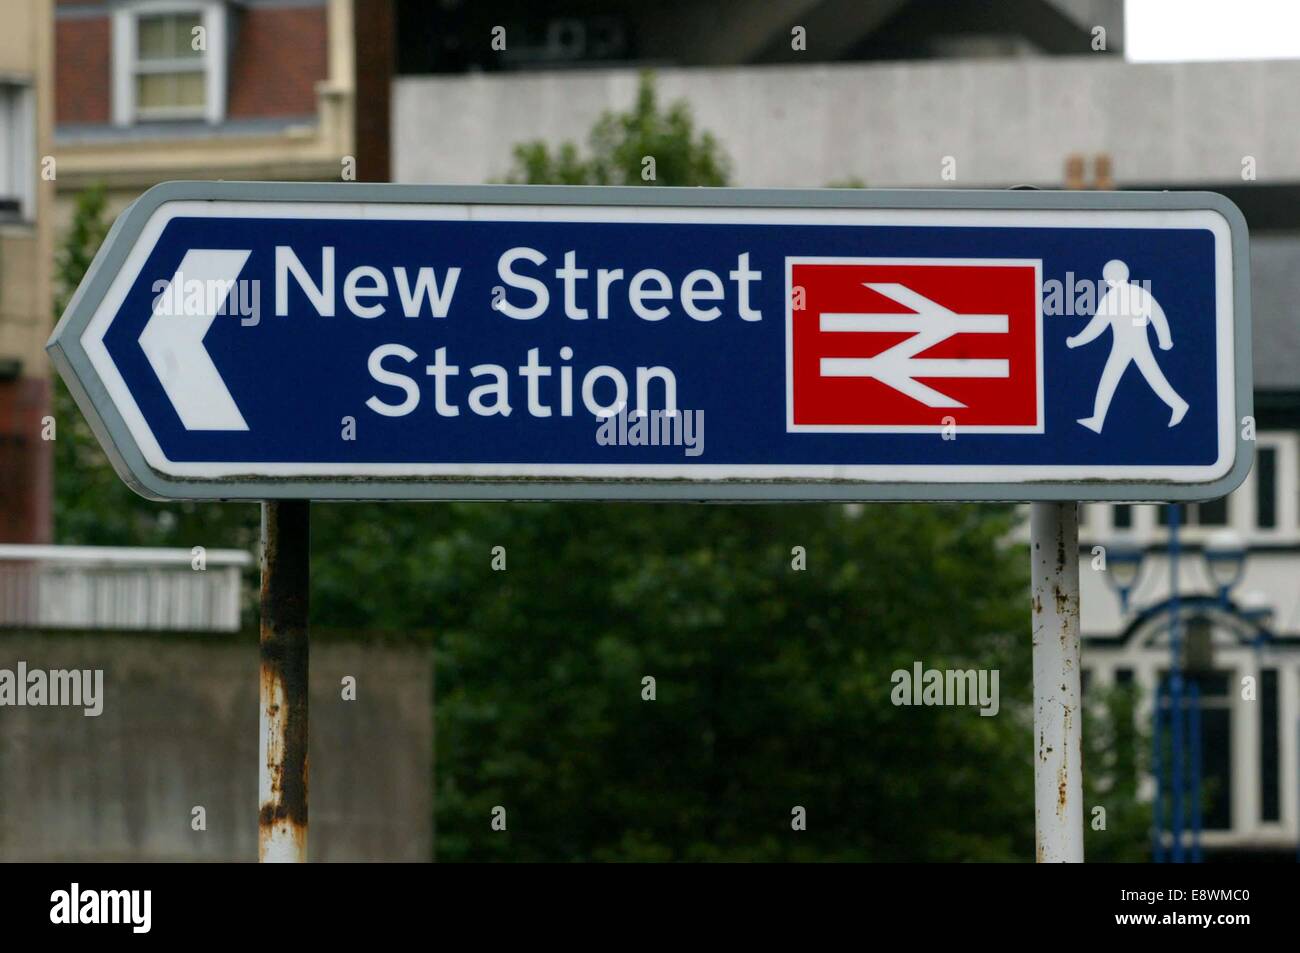 Birmingham's New Street station. Stock Photo